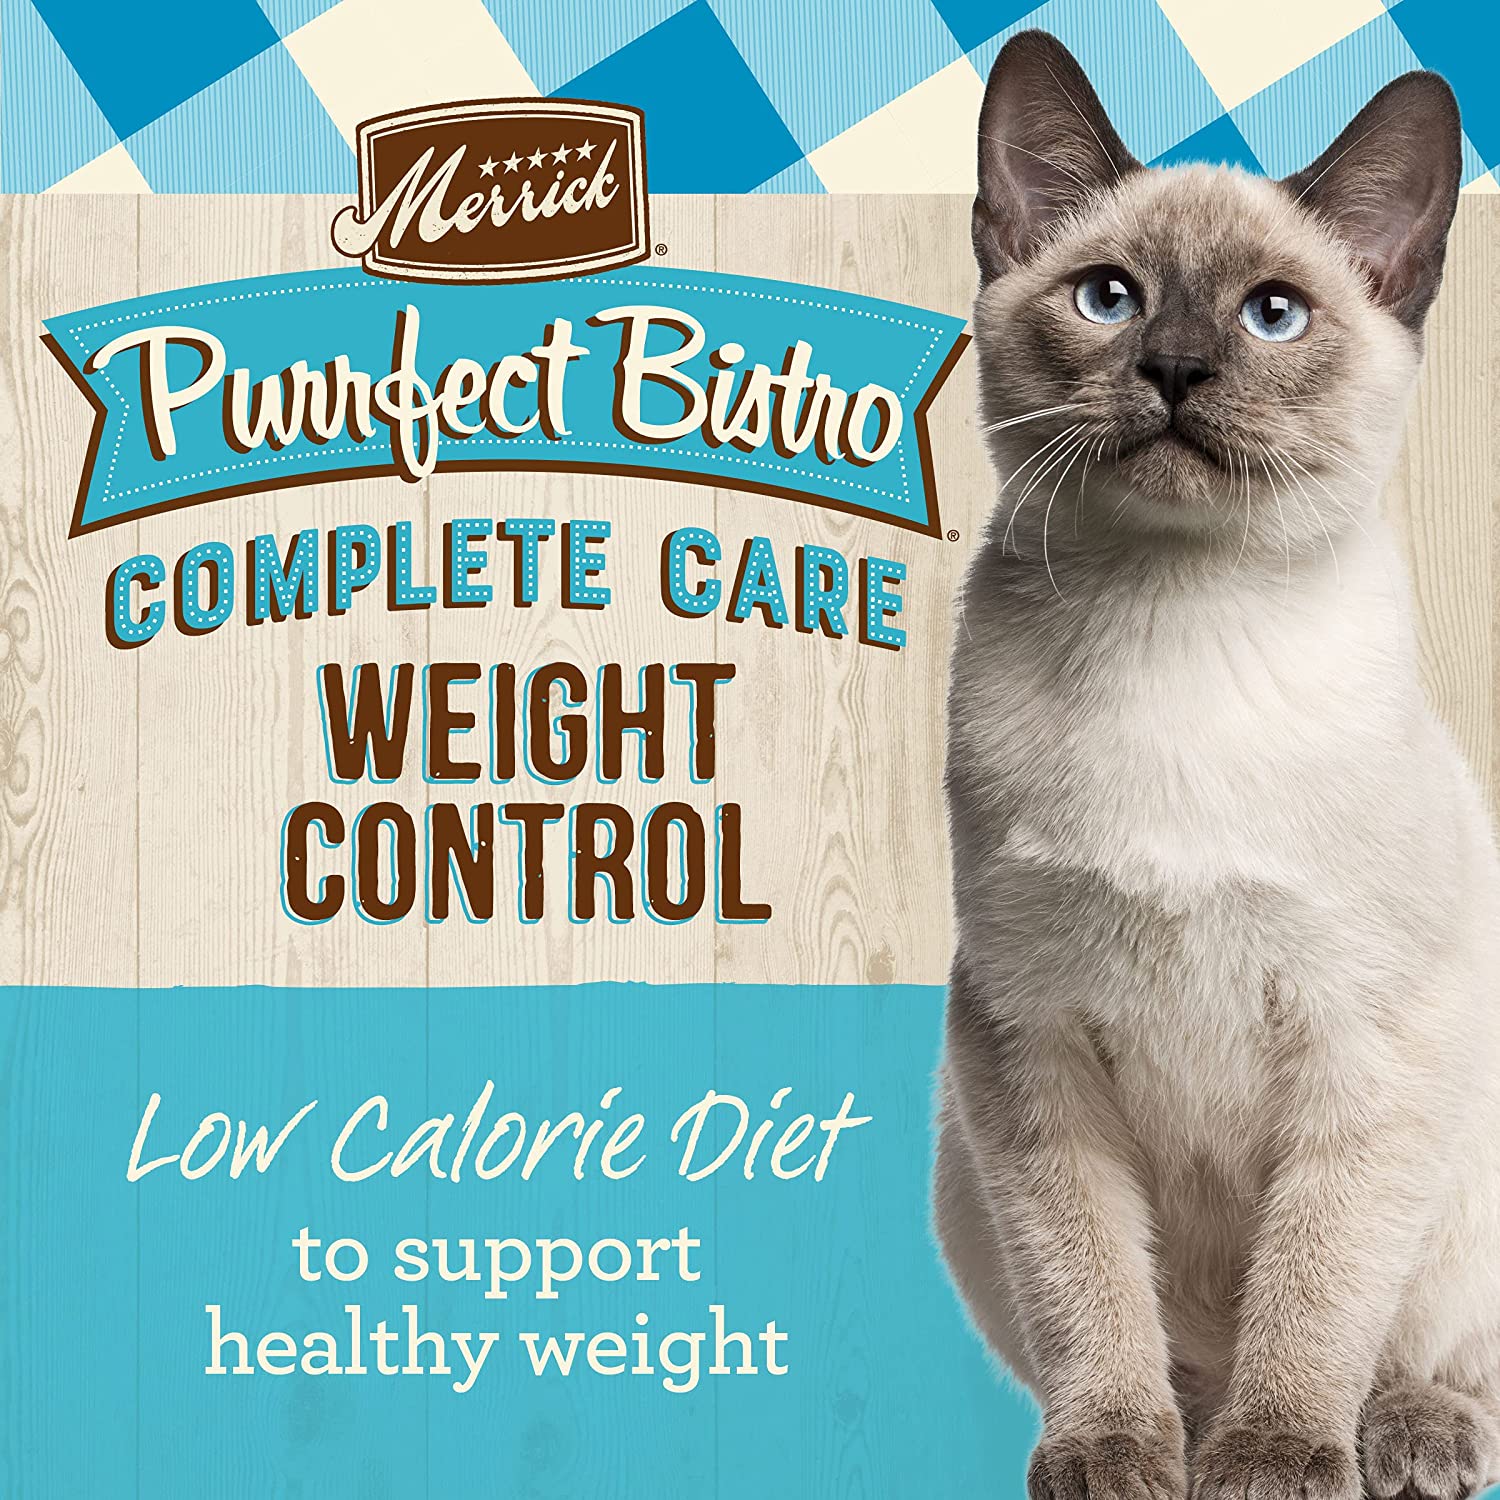 Merrick Purrfect Bistro Grain Free Complete Care Dry Cat Food